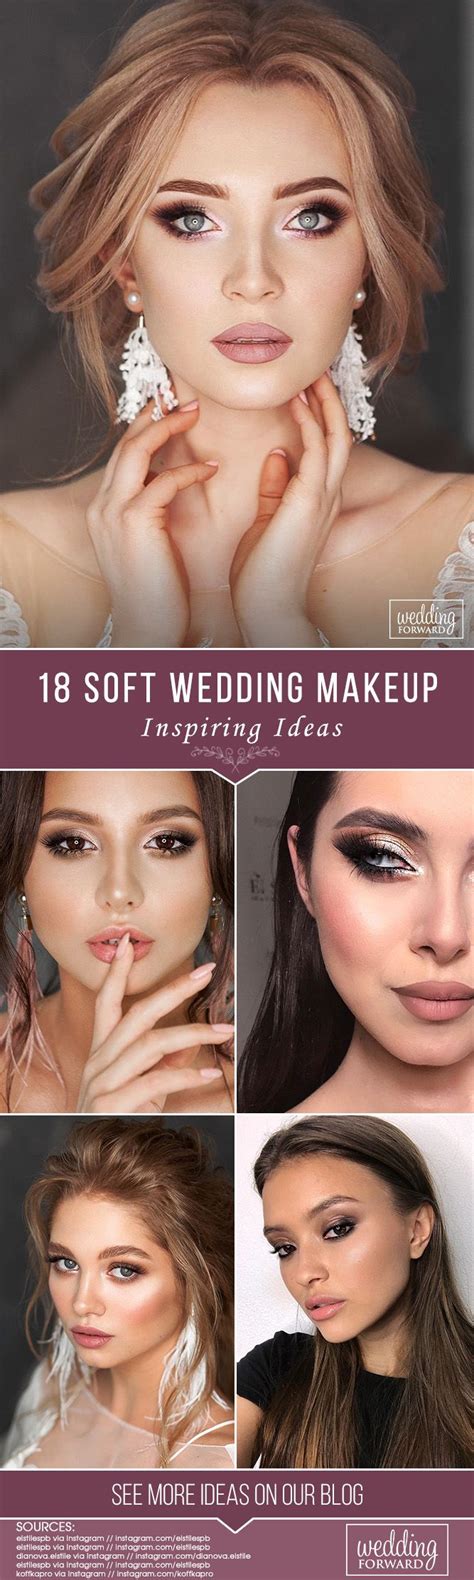 Wedding Nails For Bride Wedding Time Our Wedding Day Wedding Ideas Soft Wedding Makeup